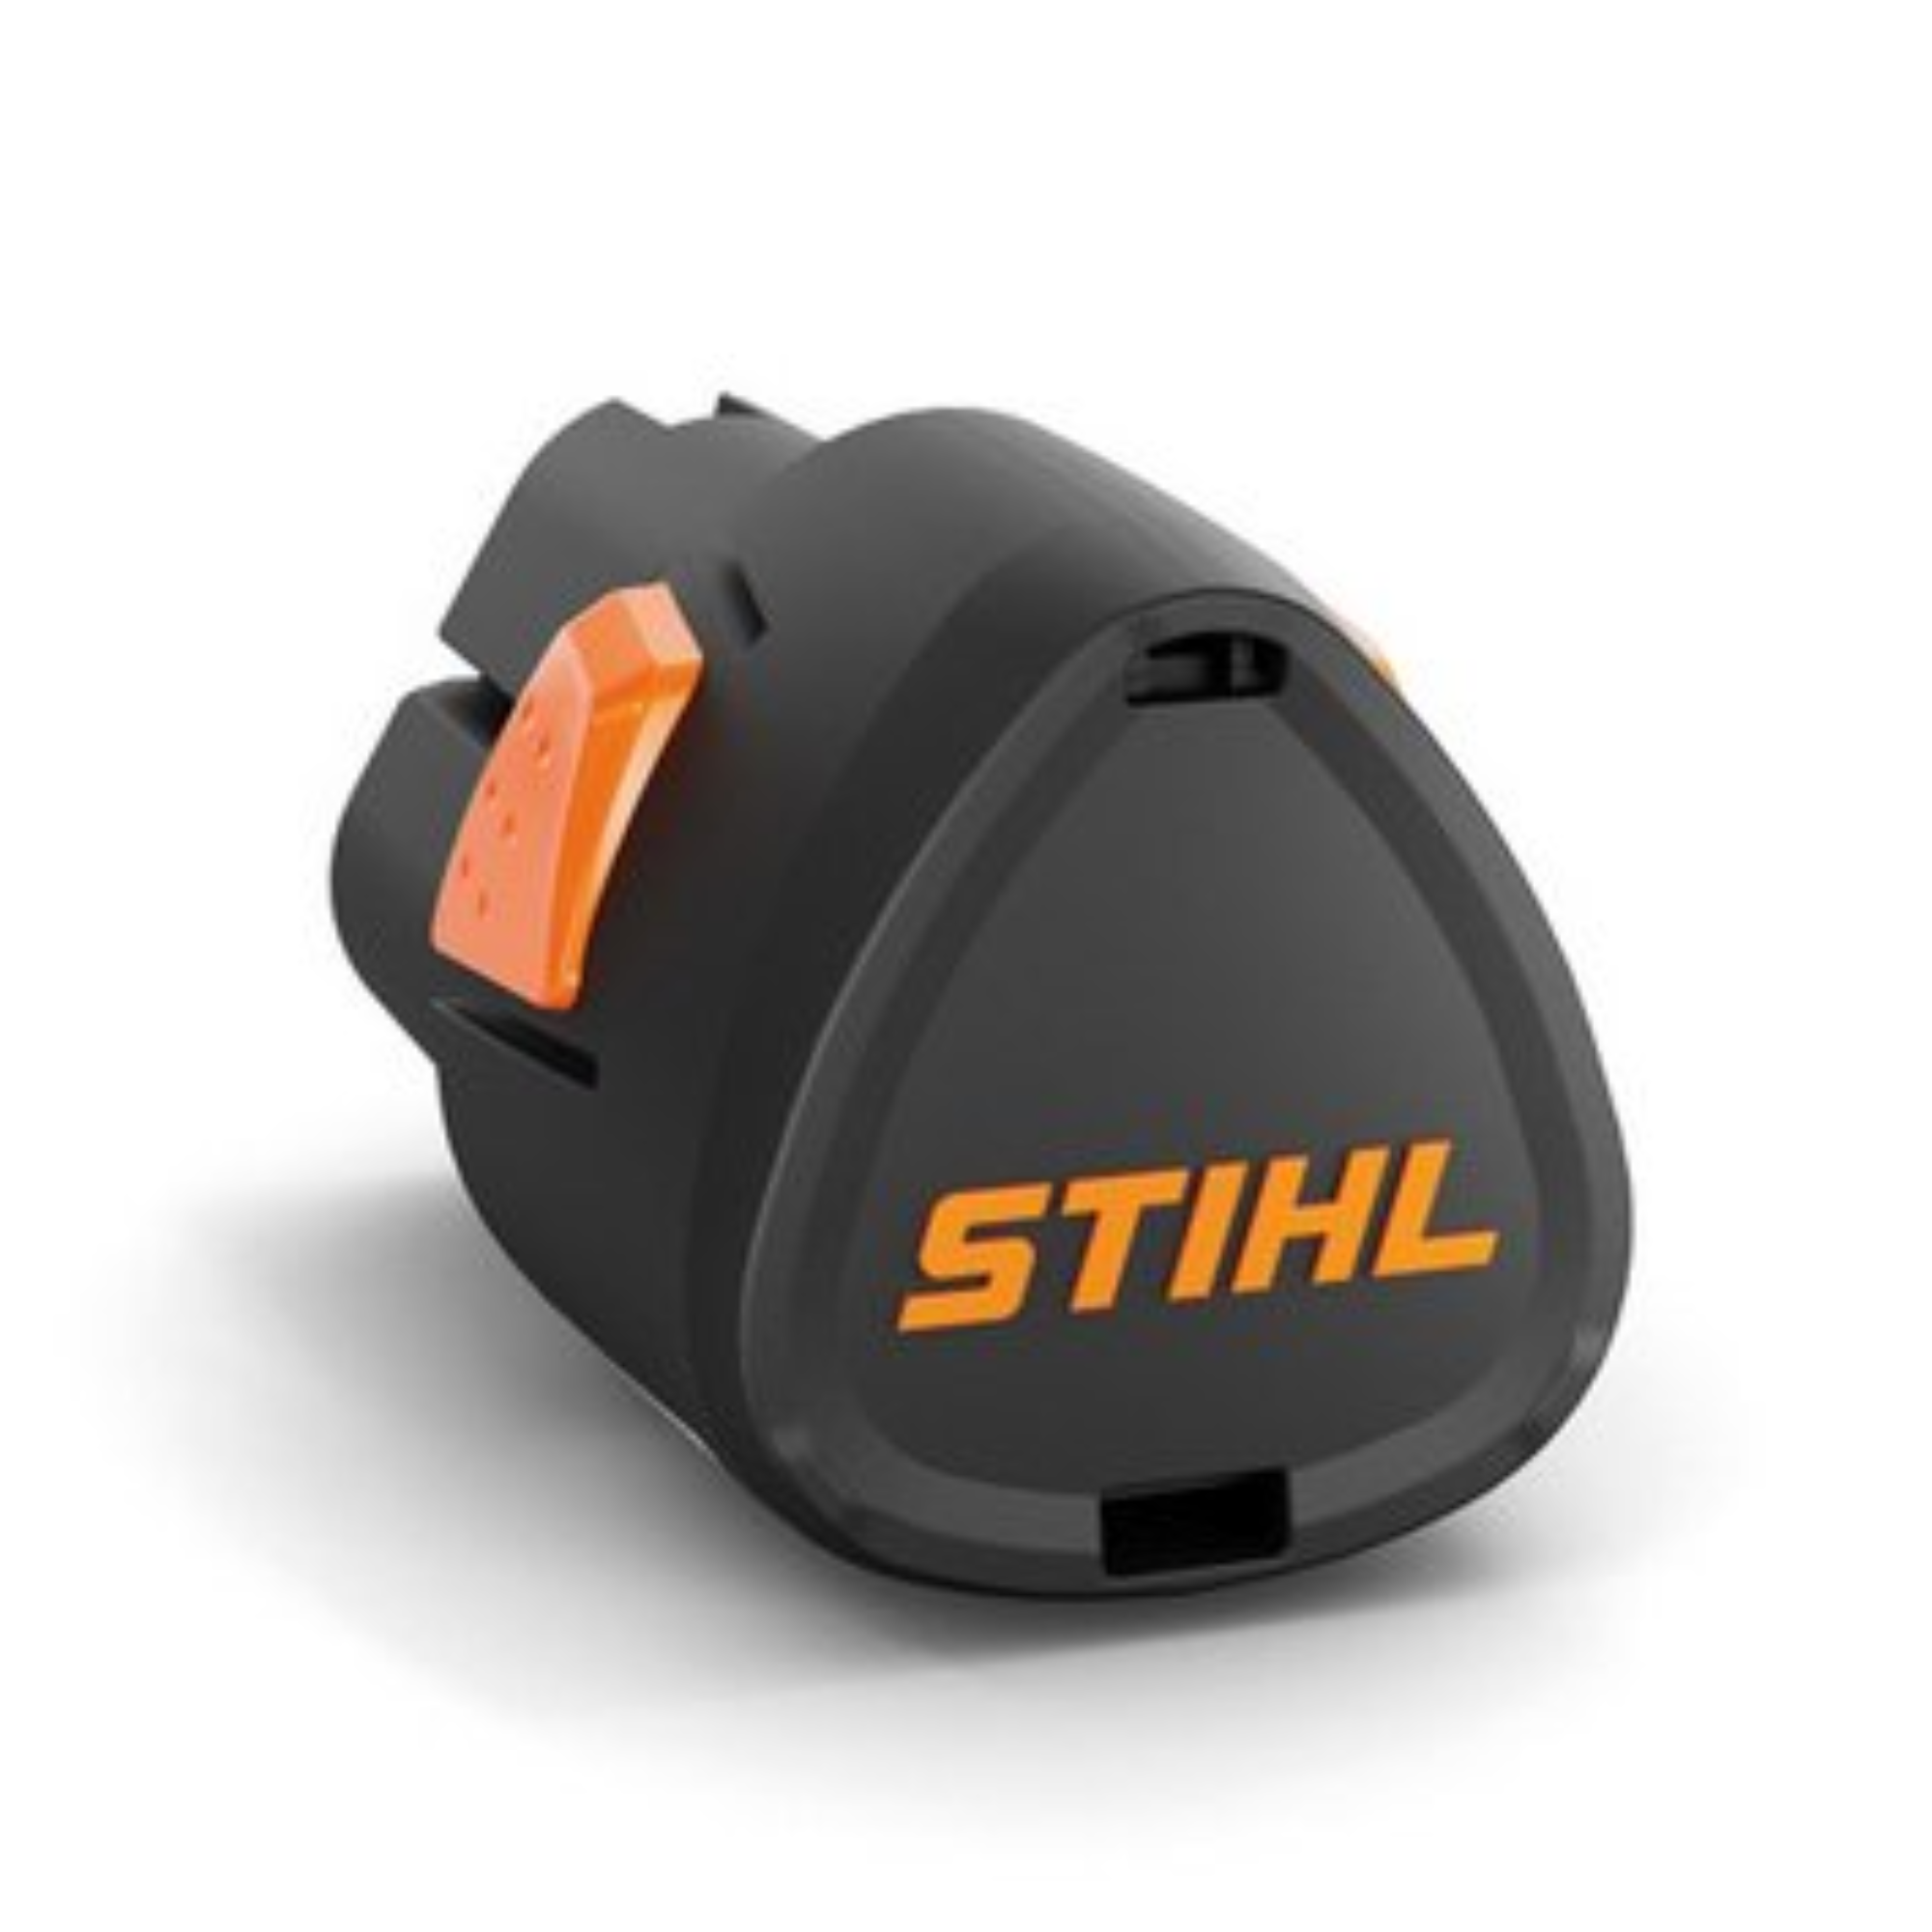 Stihl AS2 10.8 Volt Lithium Ion Battery